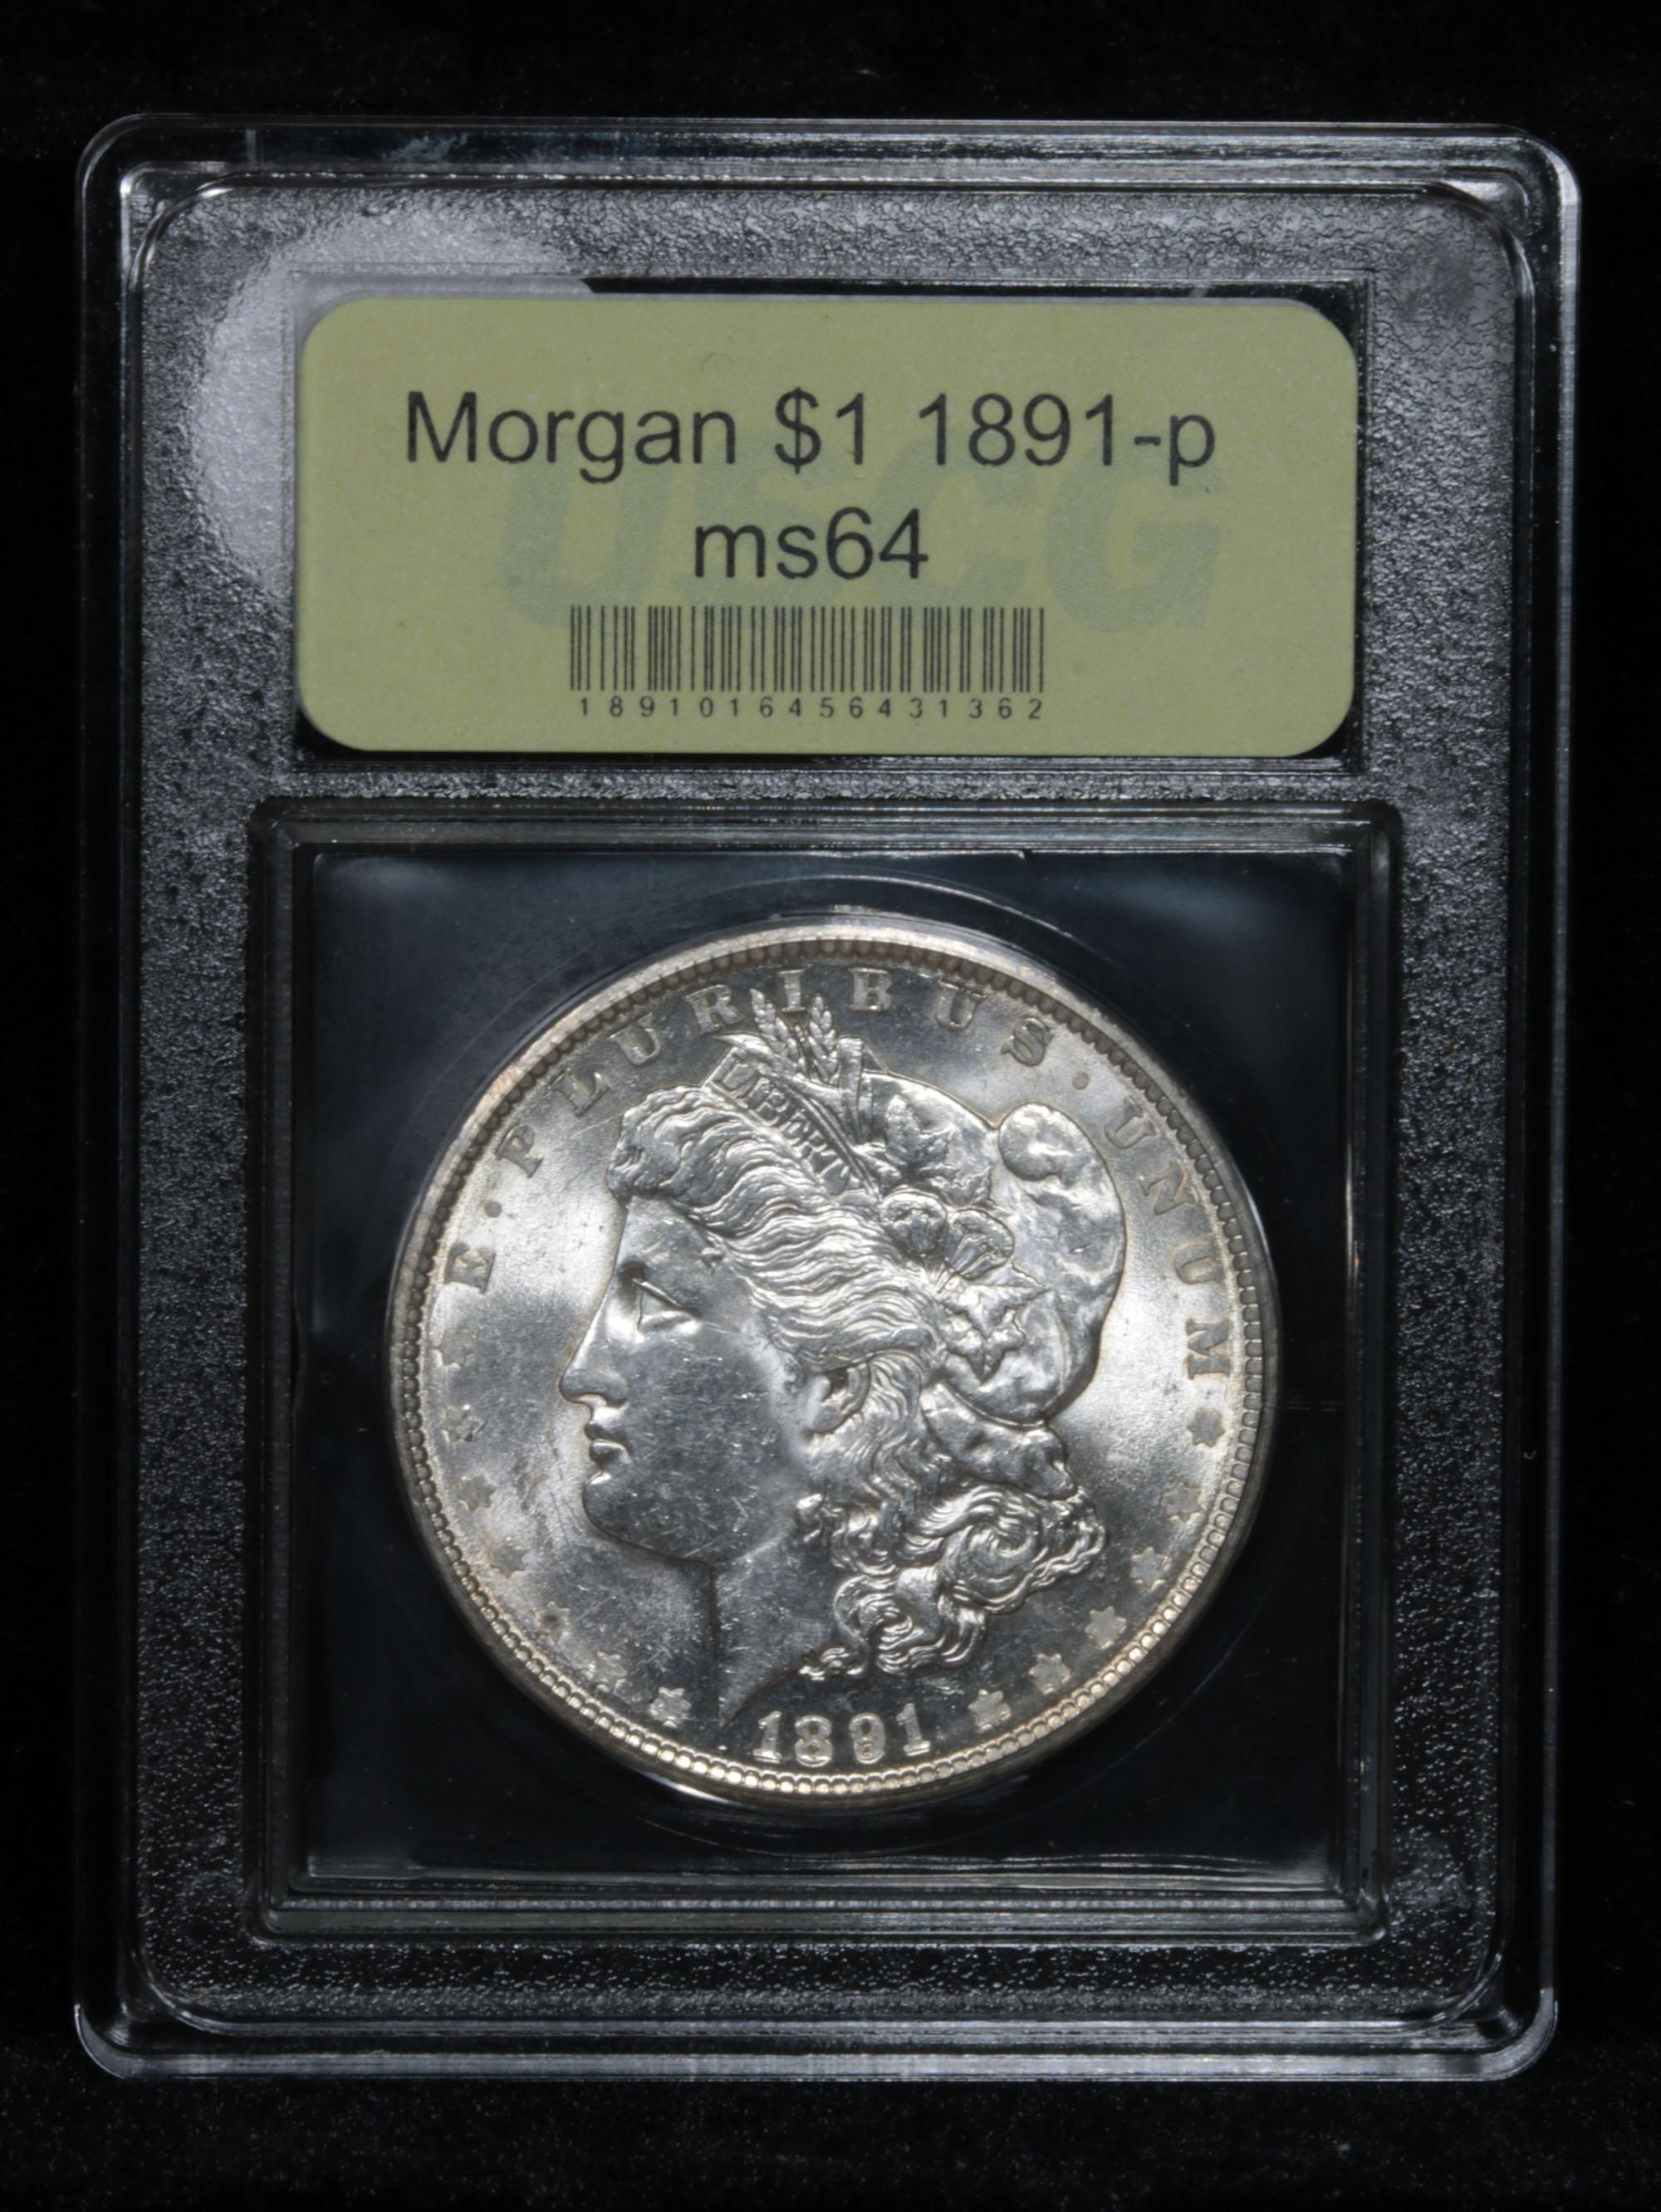 ***Auction Highlight*** 1891-p Morgan Dollar $1 Graded Choice Unc by USCG (fc)